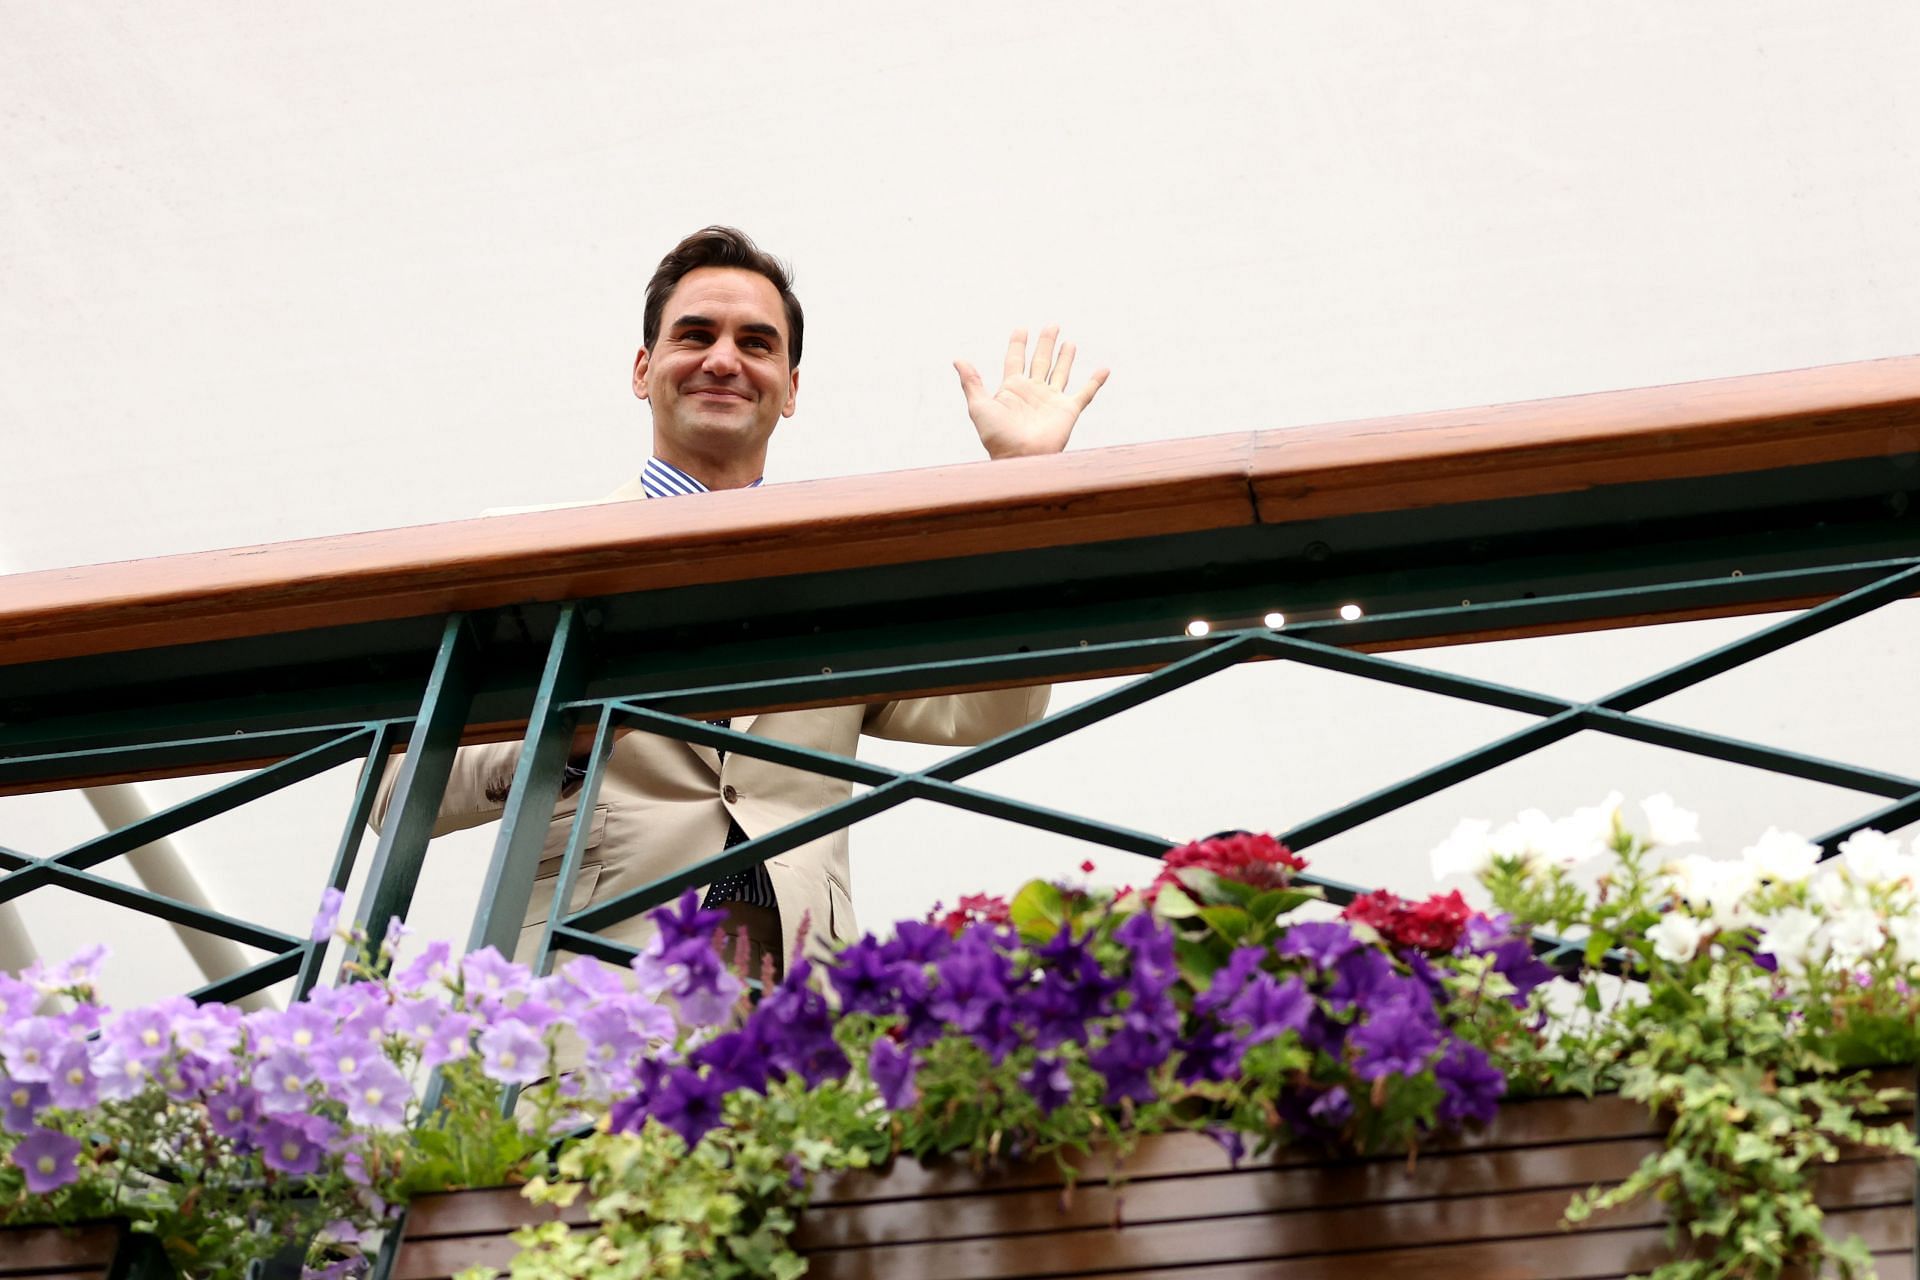 Roger Federer at the 2022 Wimbledon Championships.